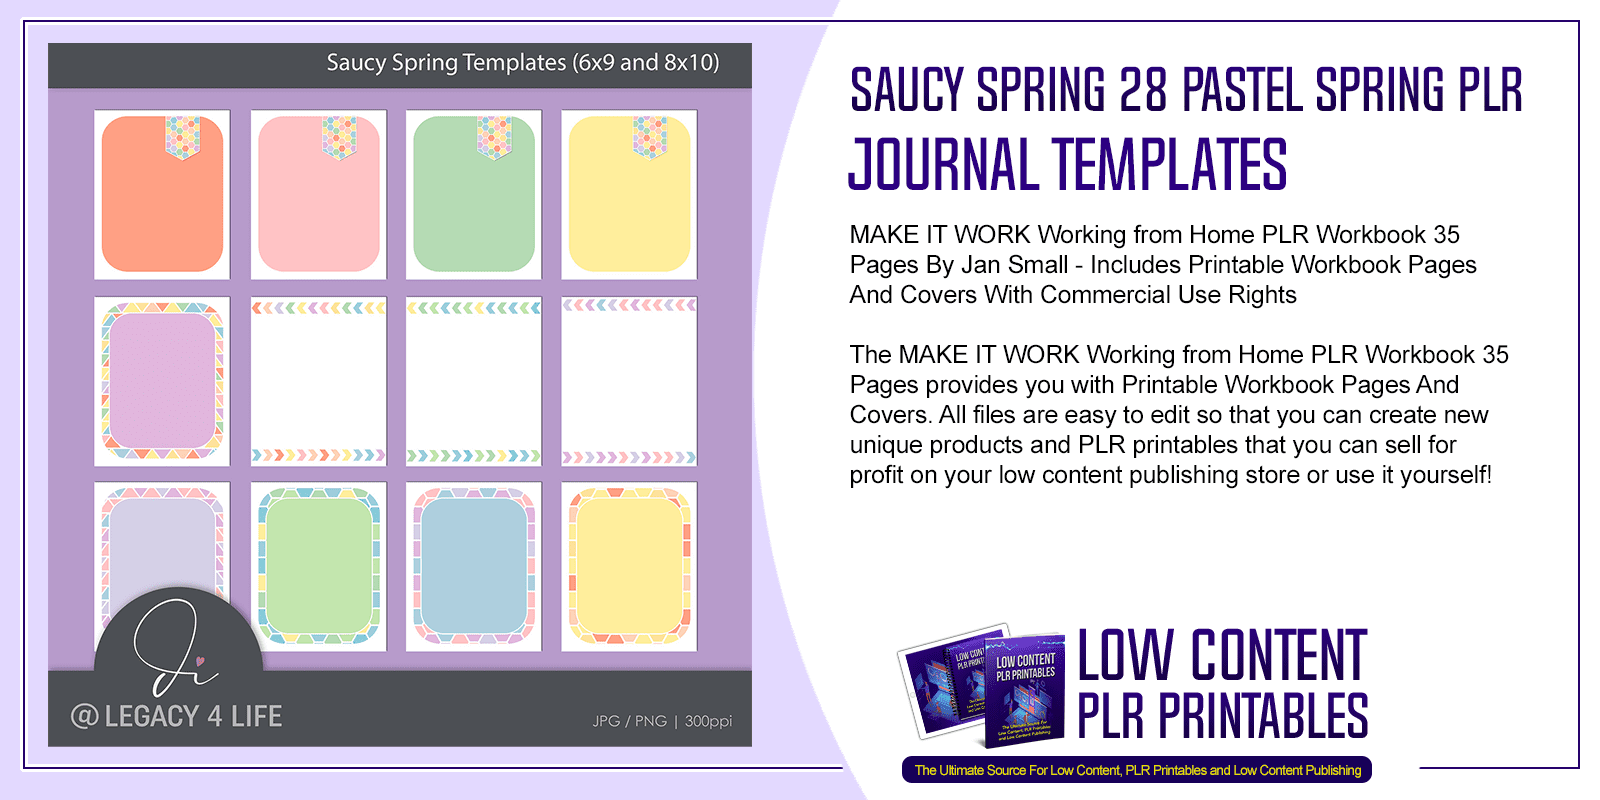 Saucy Spring 28 Pastel Spring PLR Journal Templates